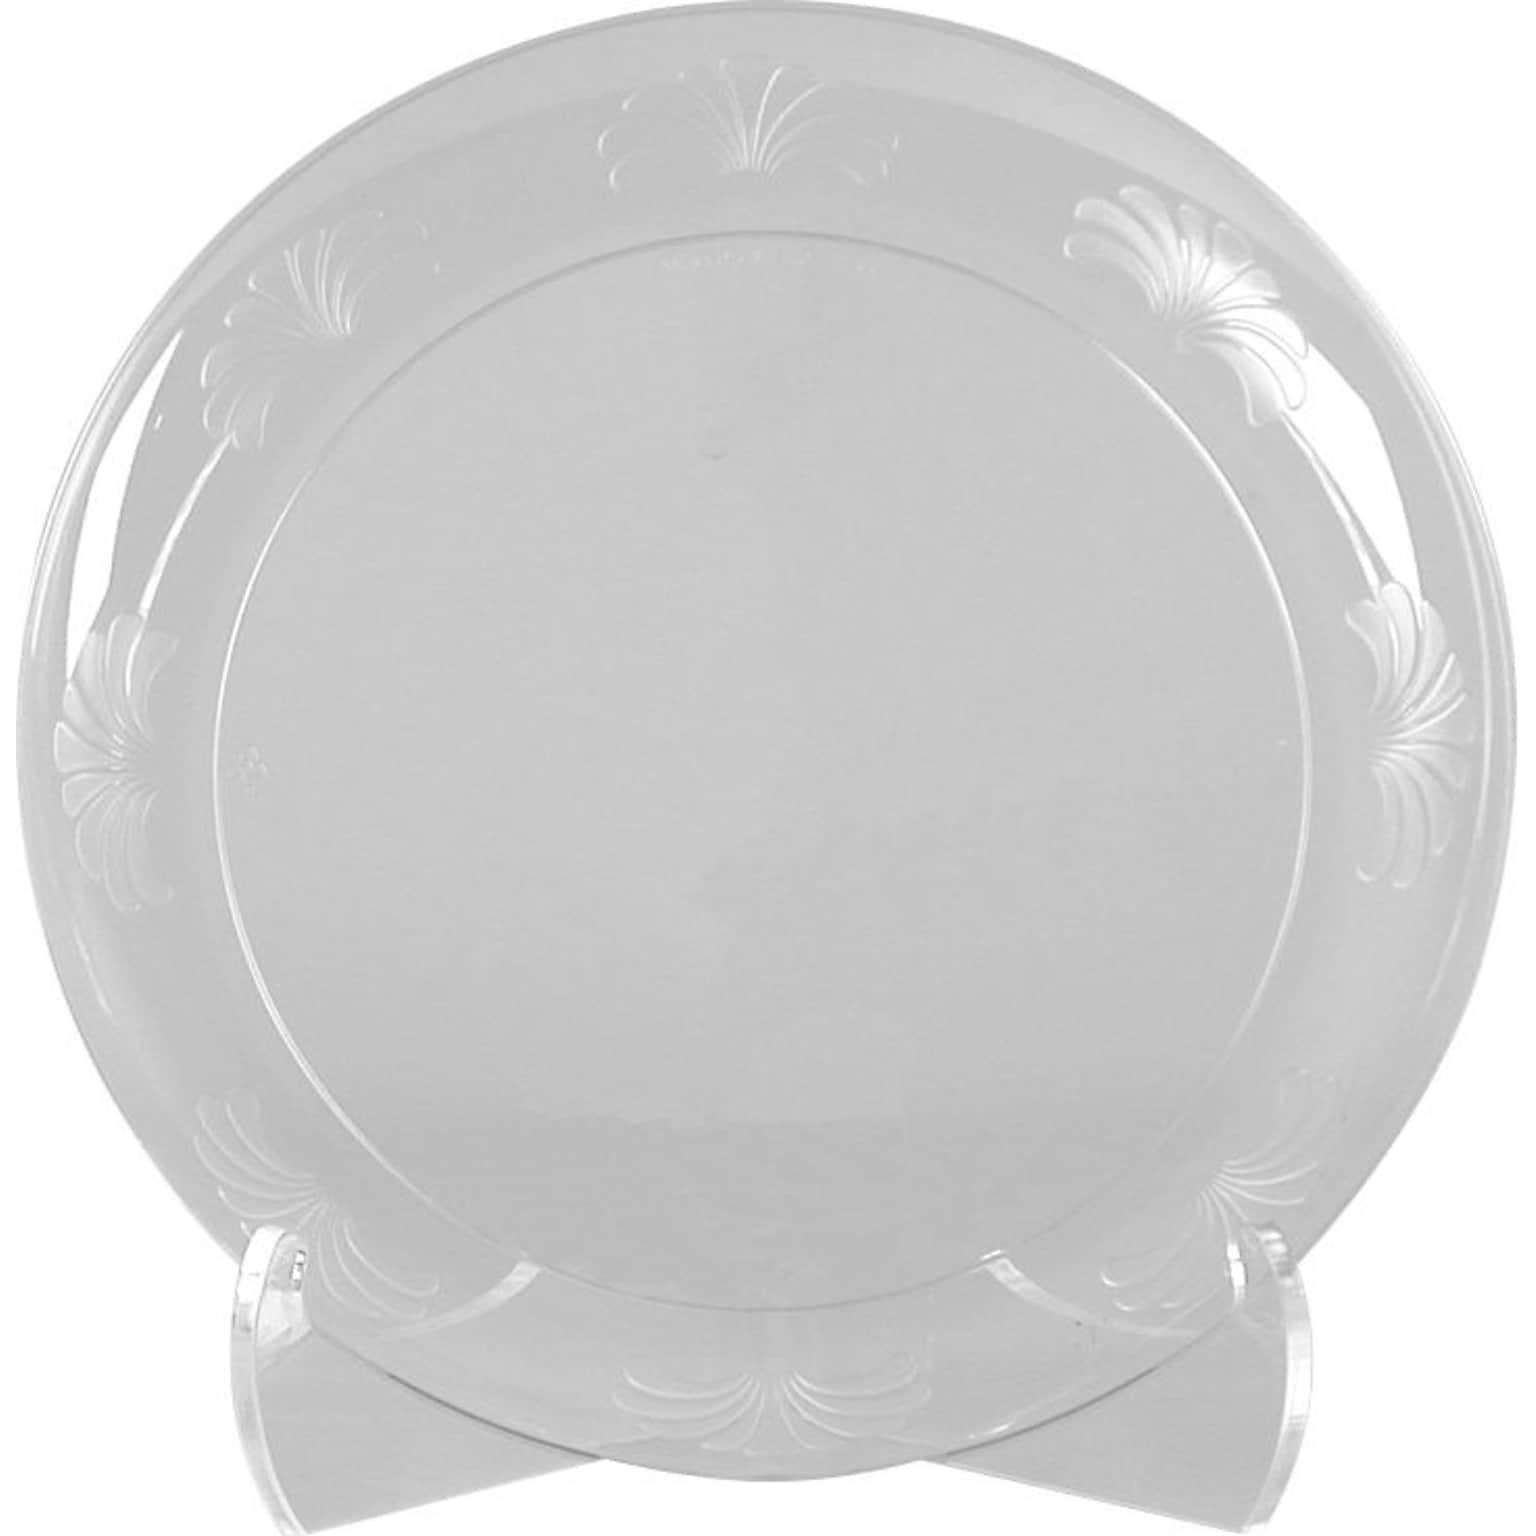 WNA Designerware Plastic Plates, 10.25, Clear, 144/Carton (WNADWP10144)